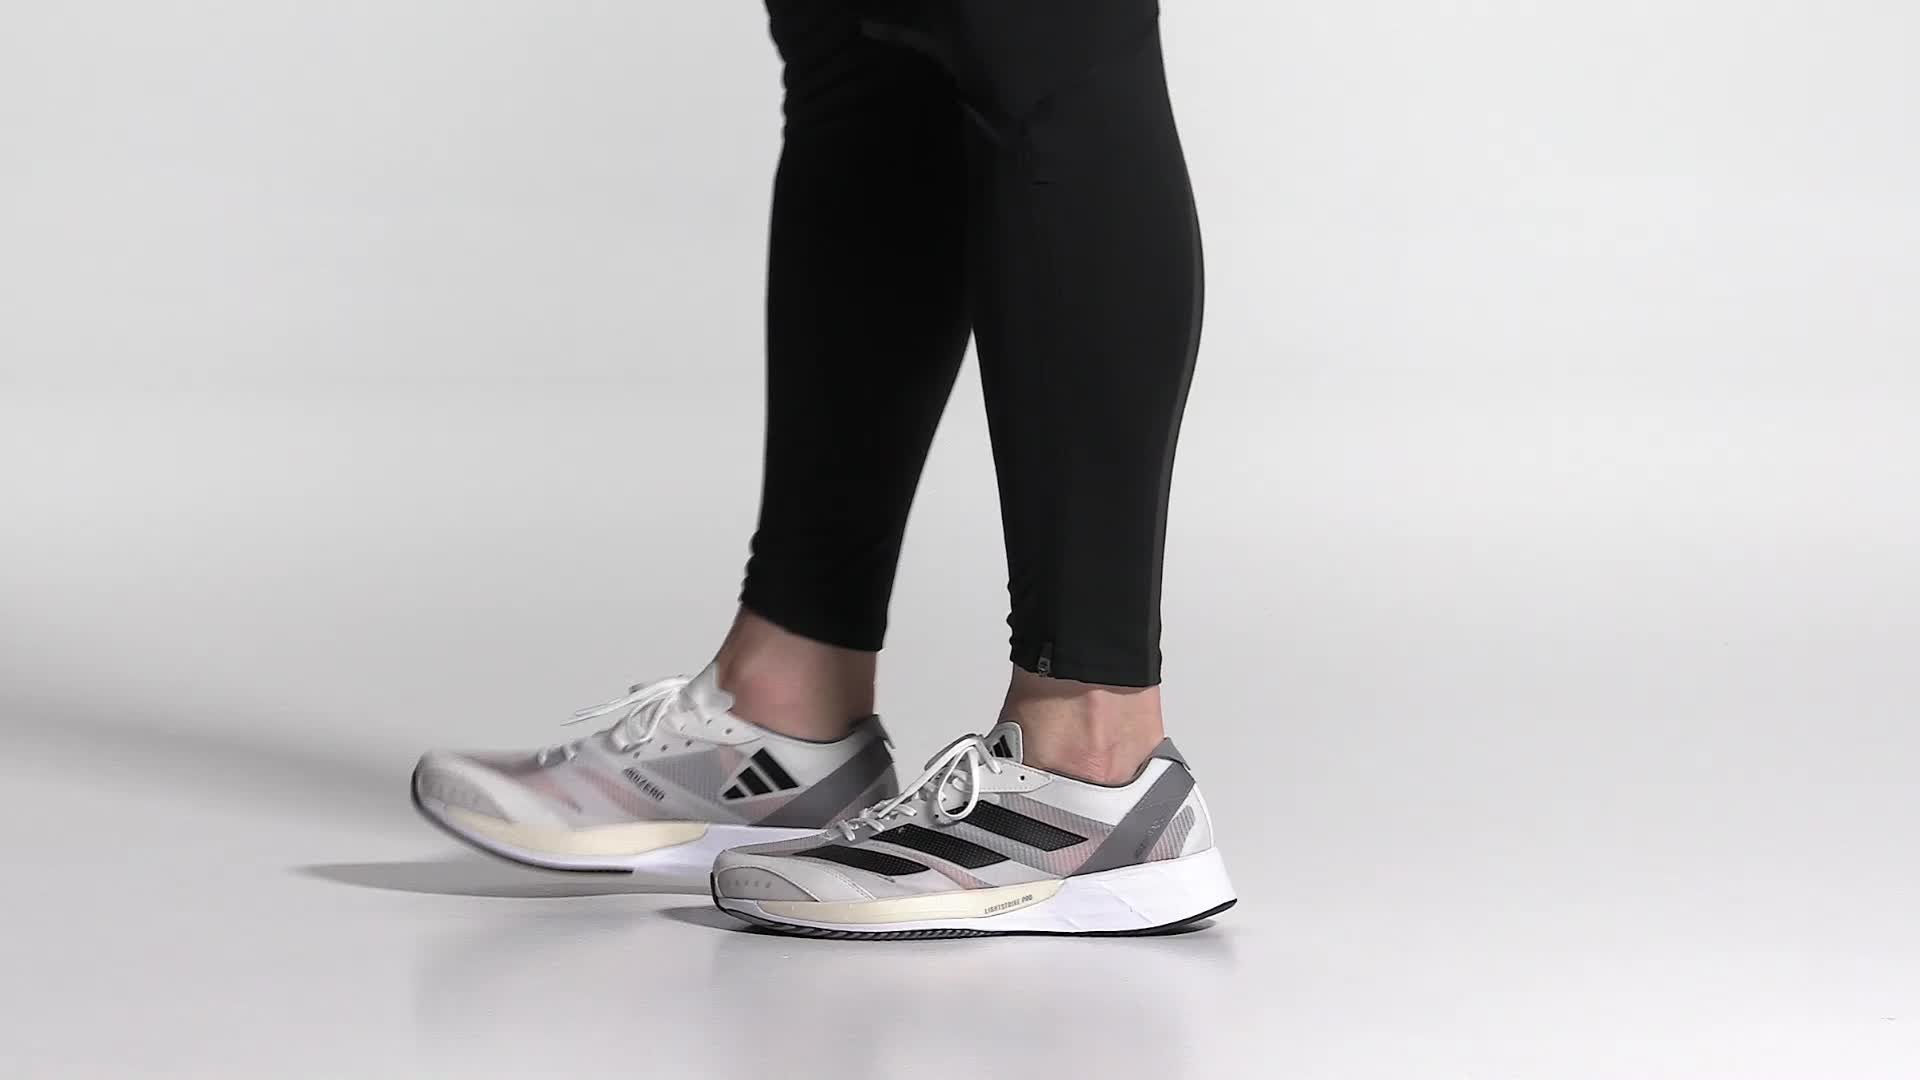 Adios 7 Running Shoes - White | Men's Running | adidas US